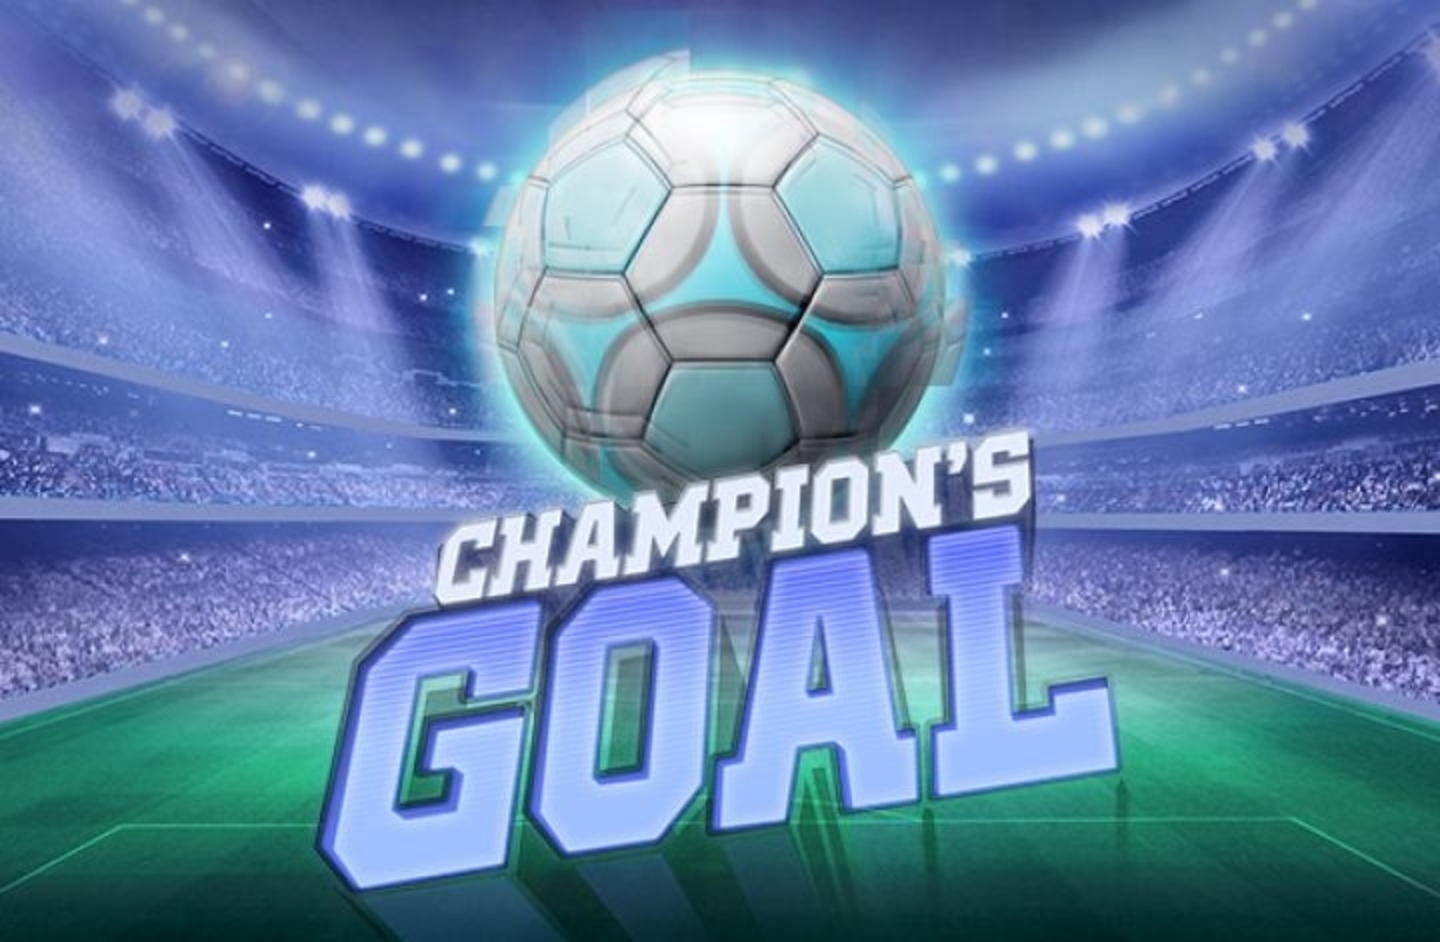 Champion's Goal demo